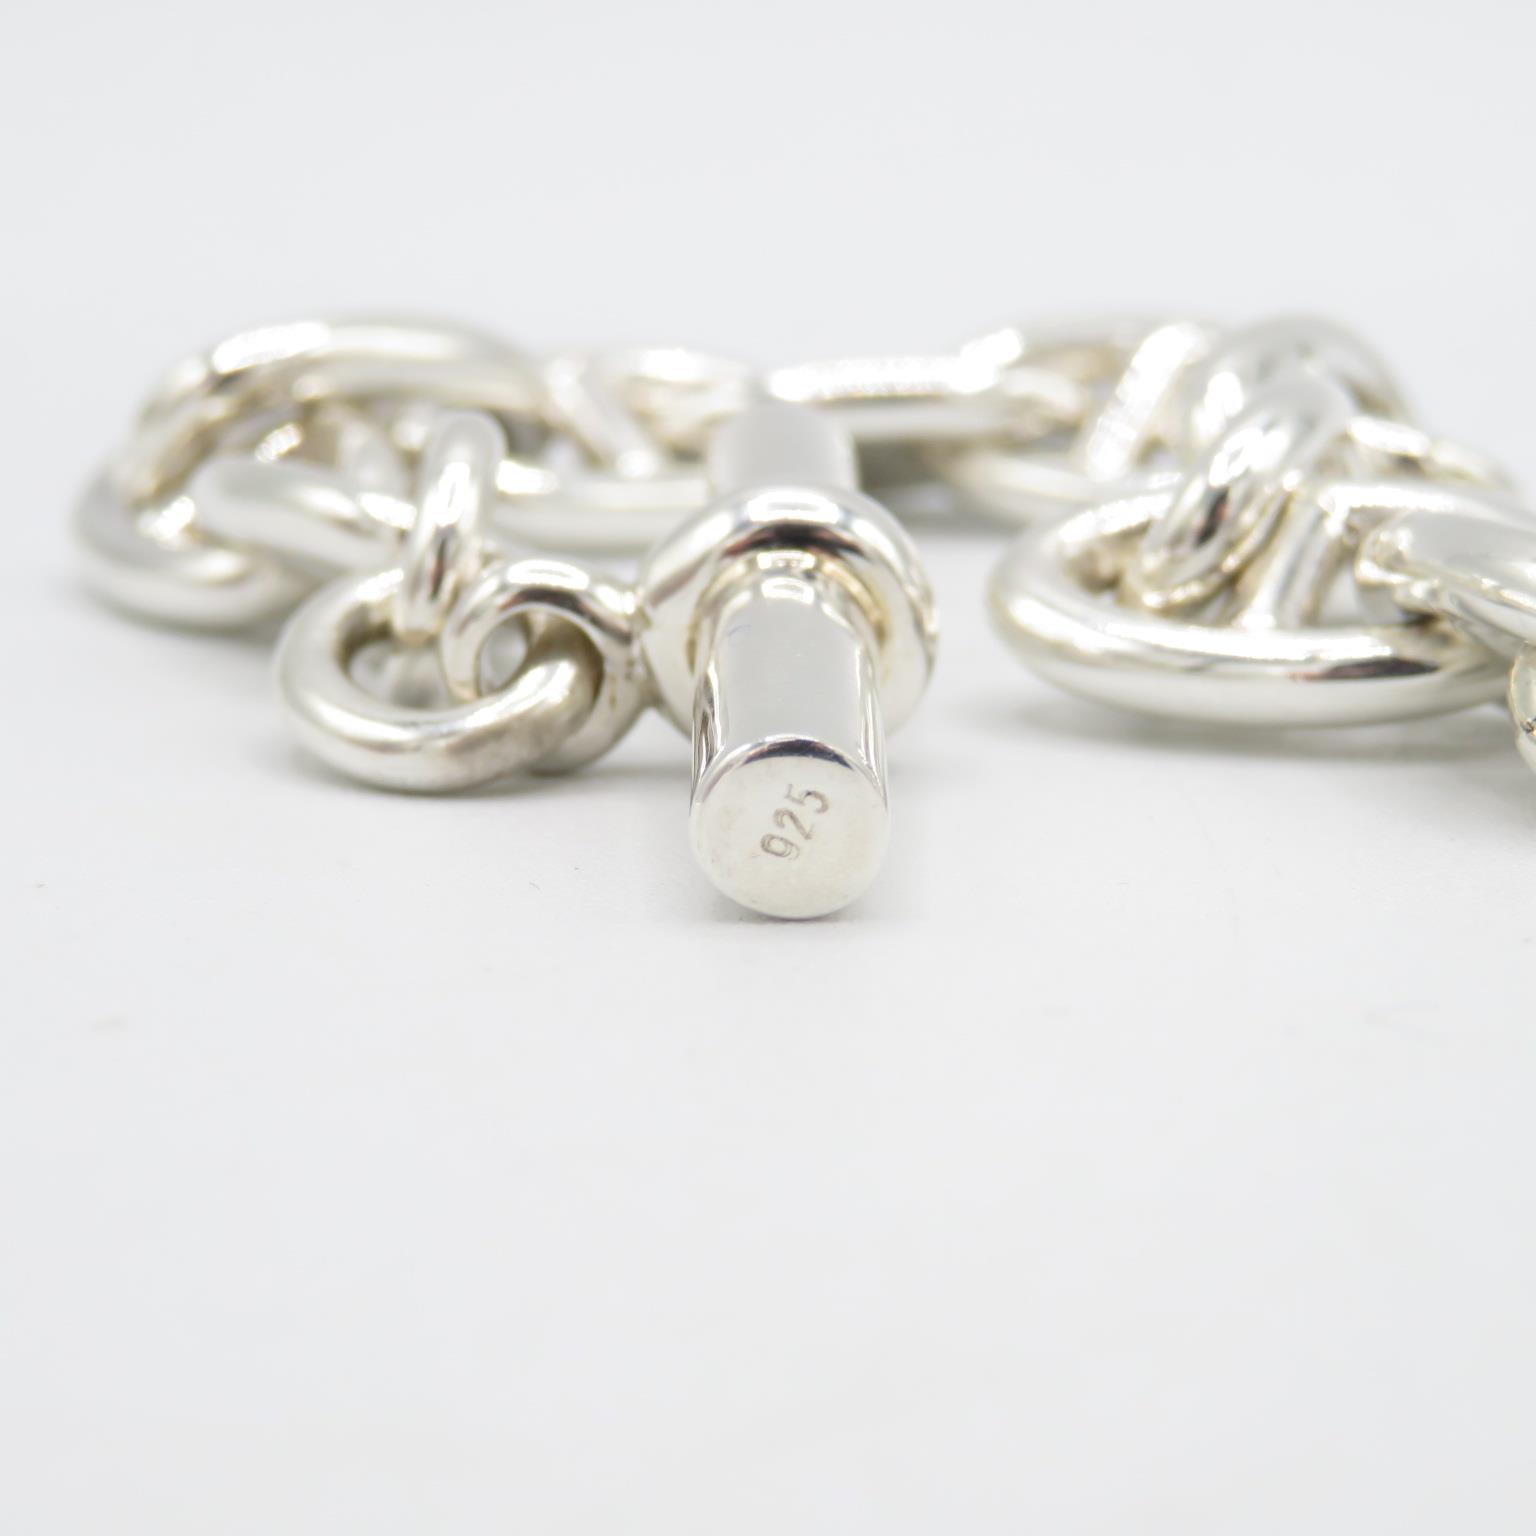 HM 925 Sterling Silver link bracelet (70g) measures 22cm when open including loop and bar - Image 4 of 4